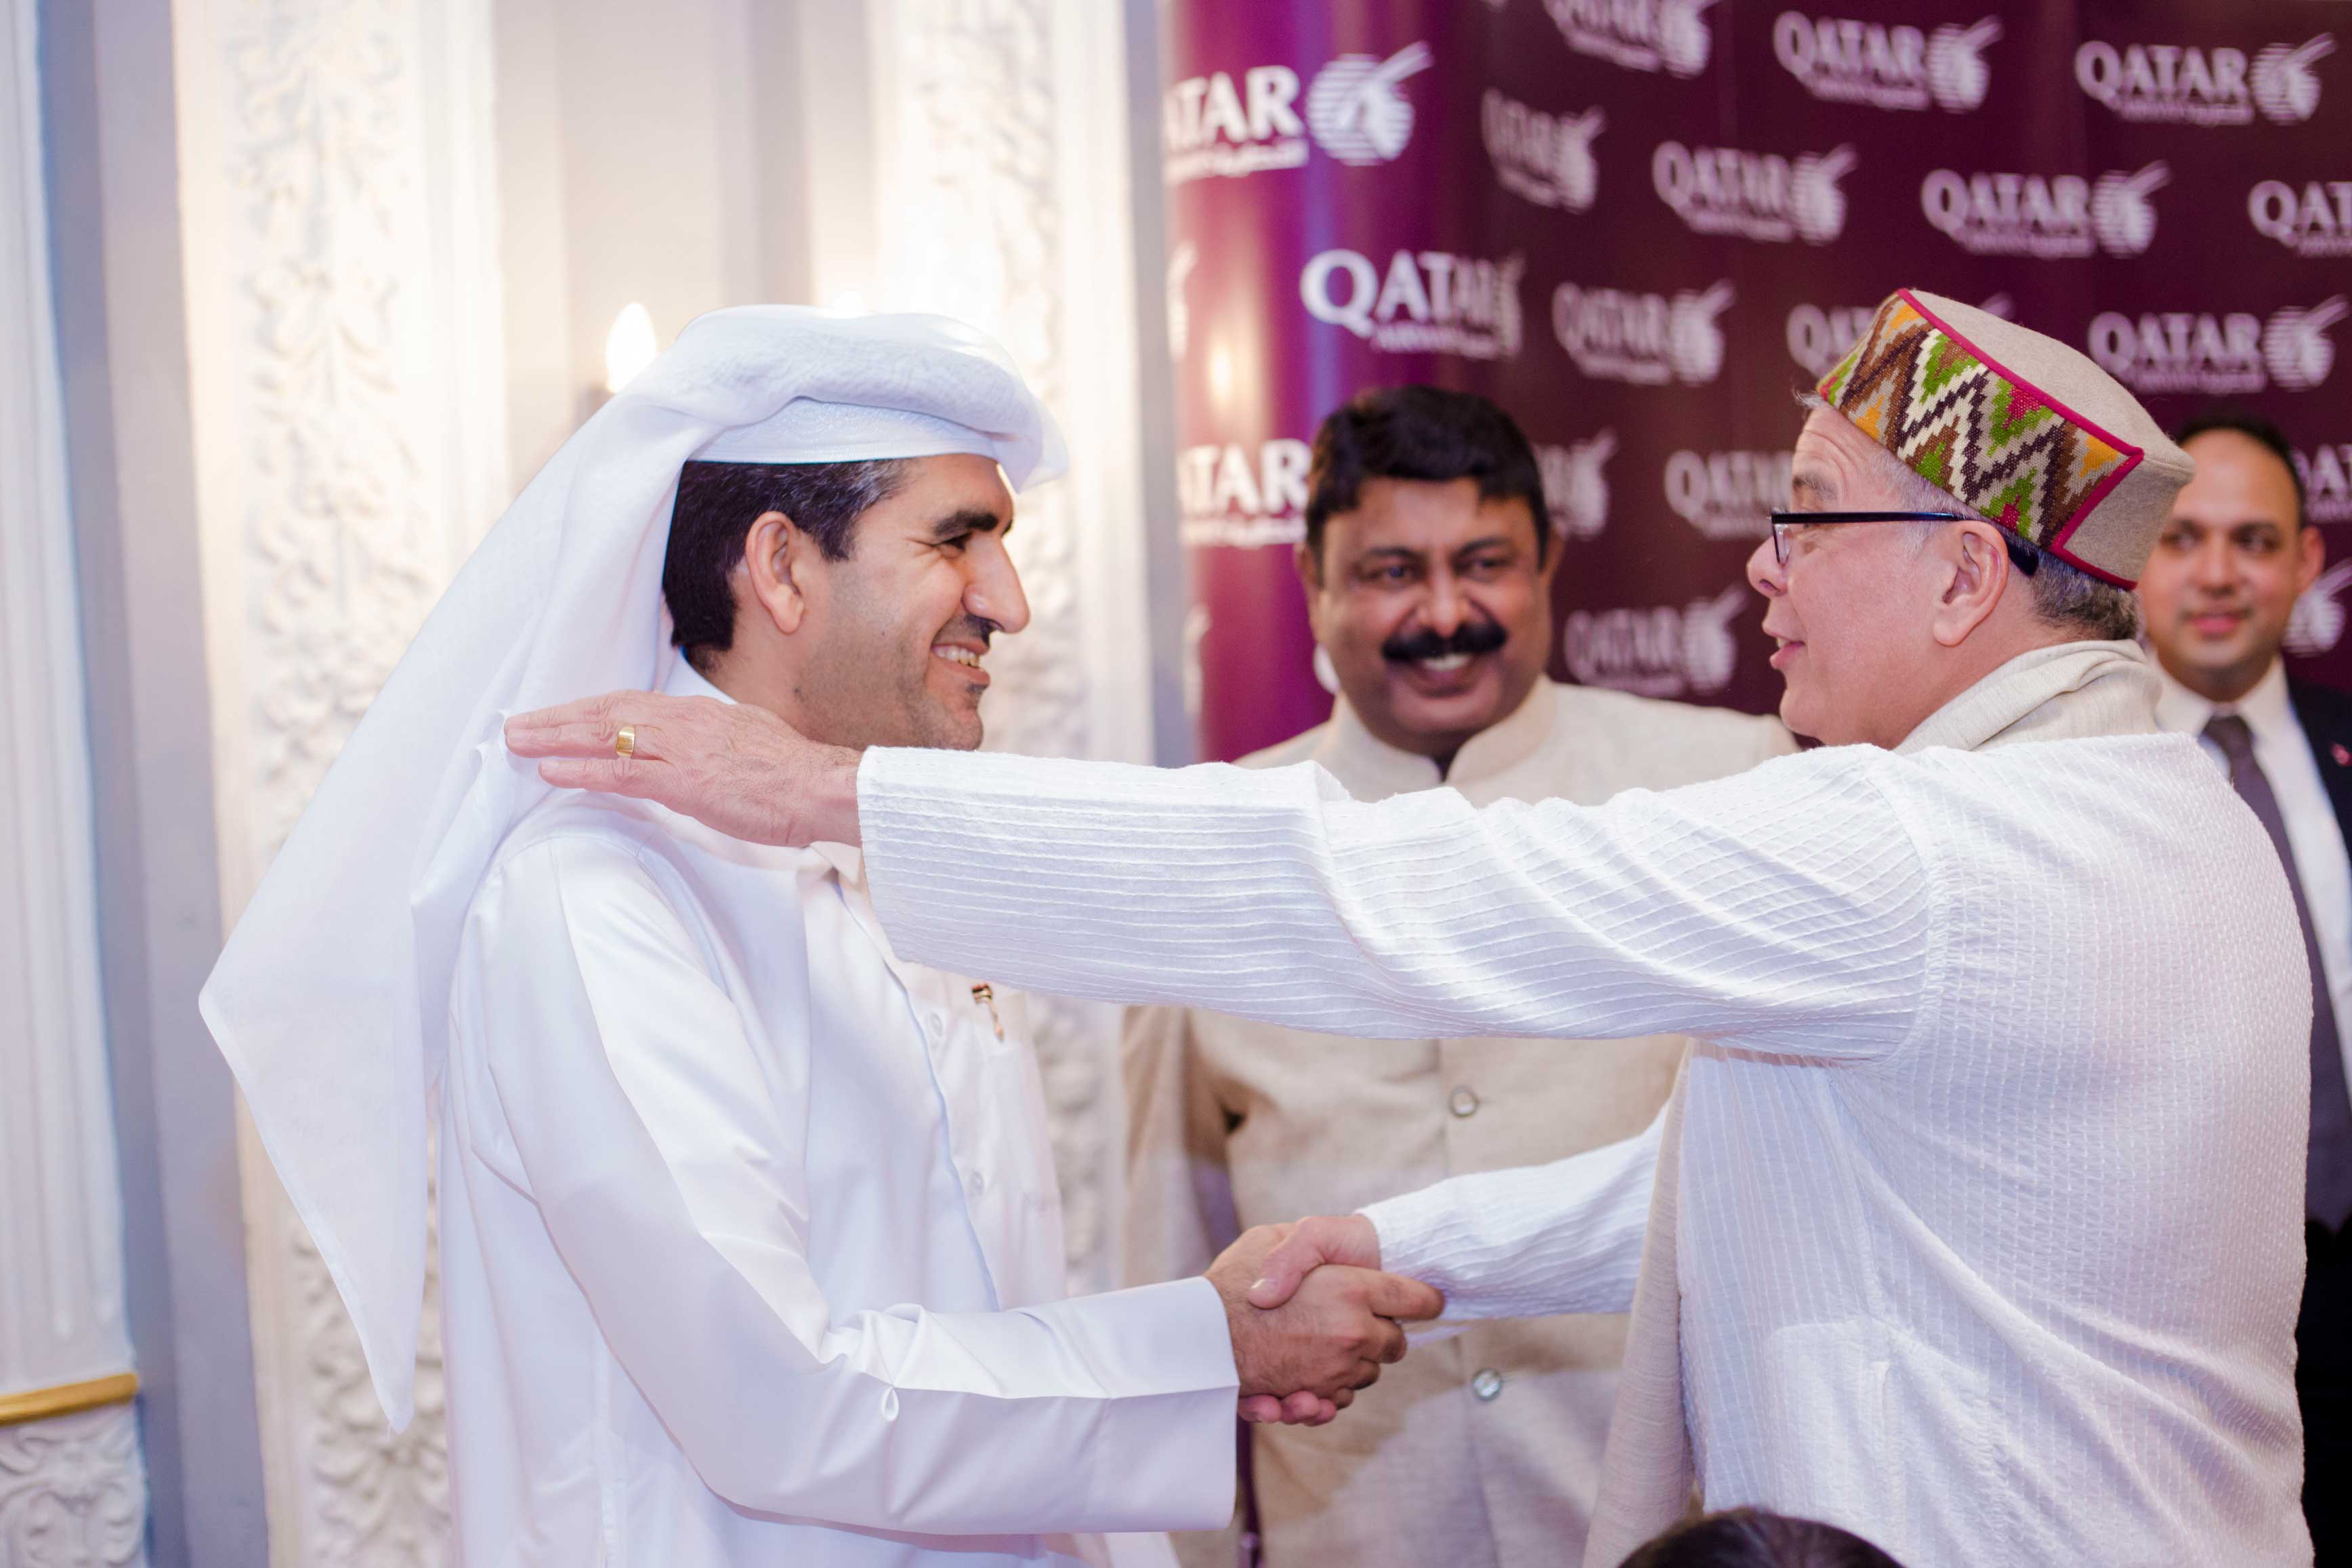 Qatar Airways celebrates Iftar